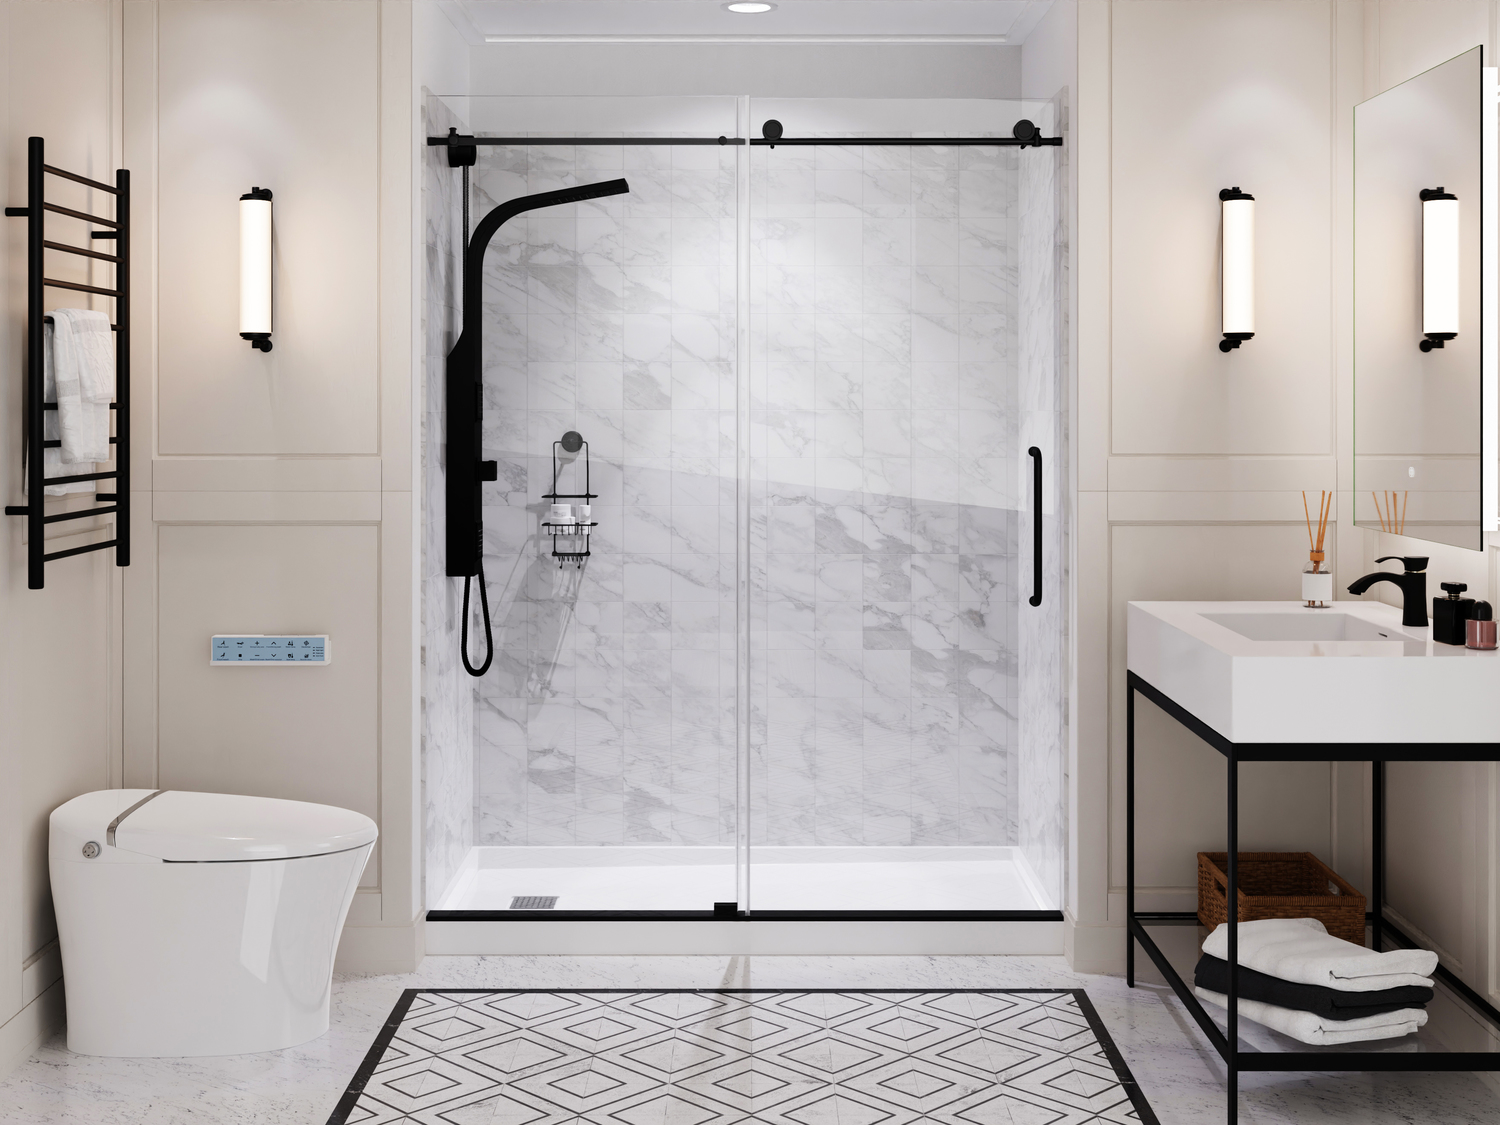 tub size shower base Anzzi SHOWER - Shower Bases - Single Threshold White